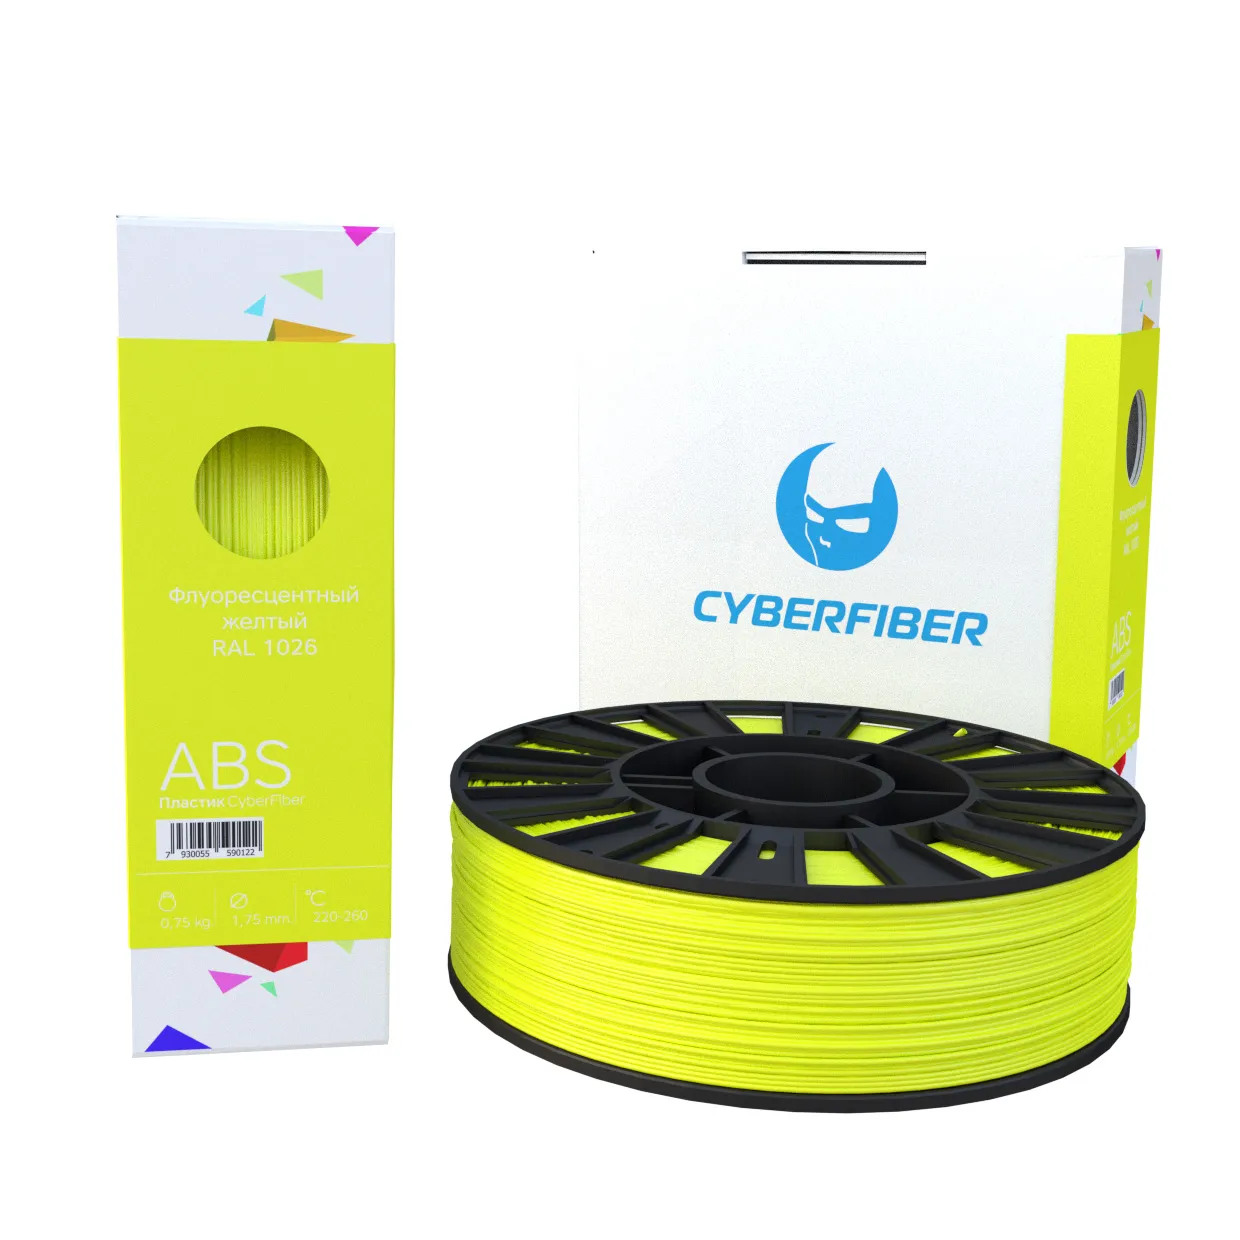 ABS пластик CyberFiber 1,75, флуоресцентный желтый, 750 г